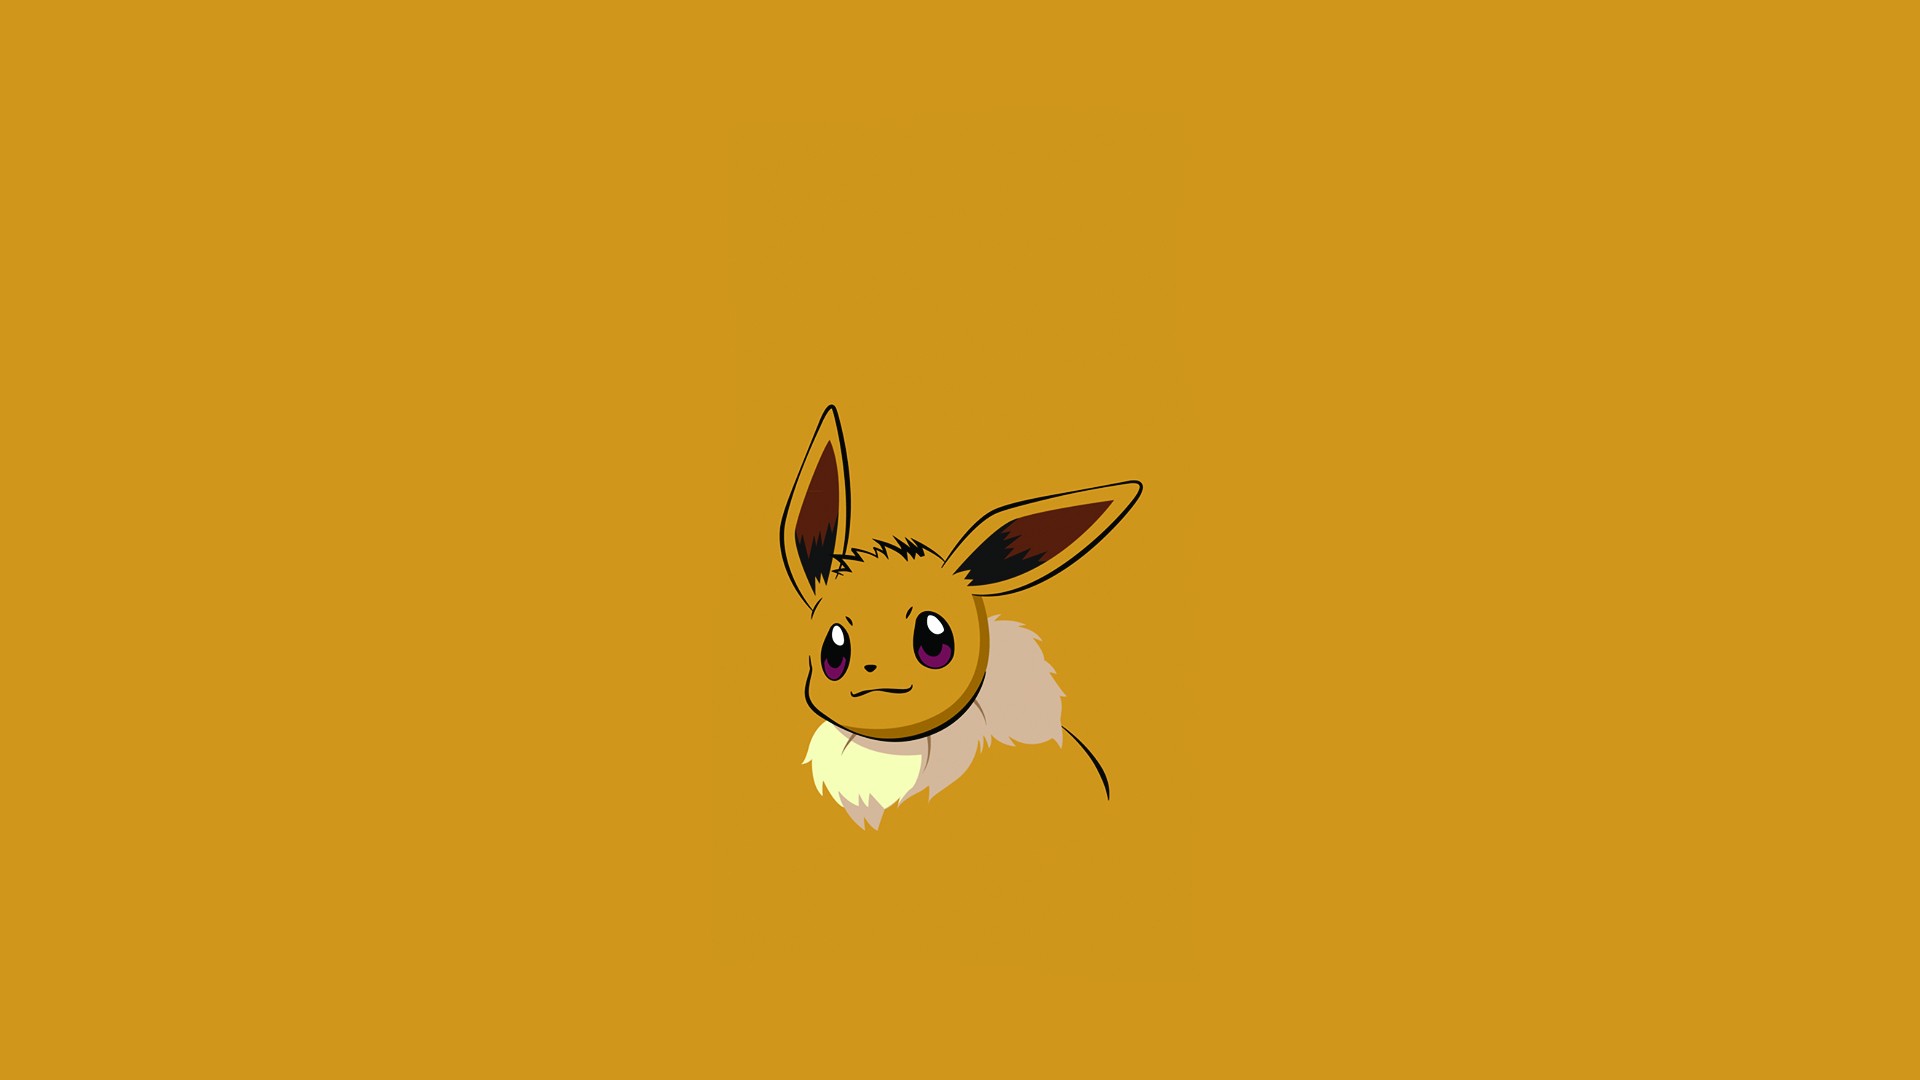 General 1920x1080 Pokémon Eevee minimalism anime orange background simple background